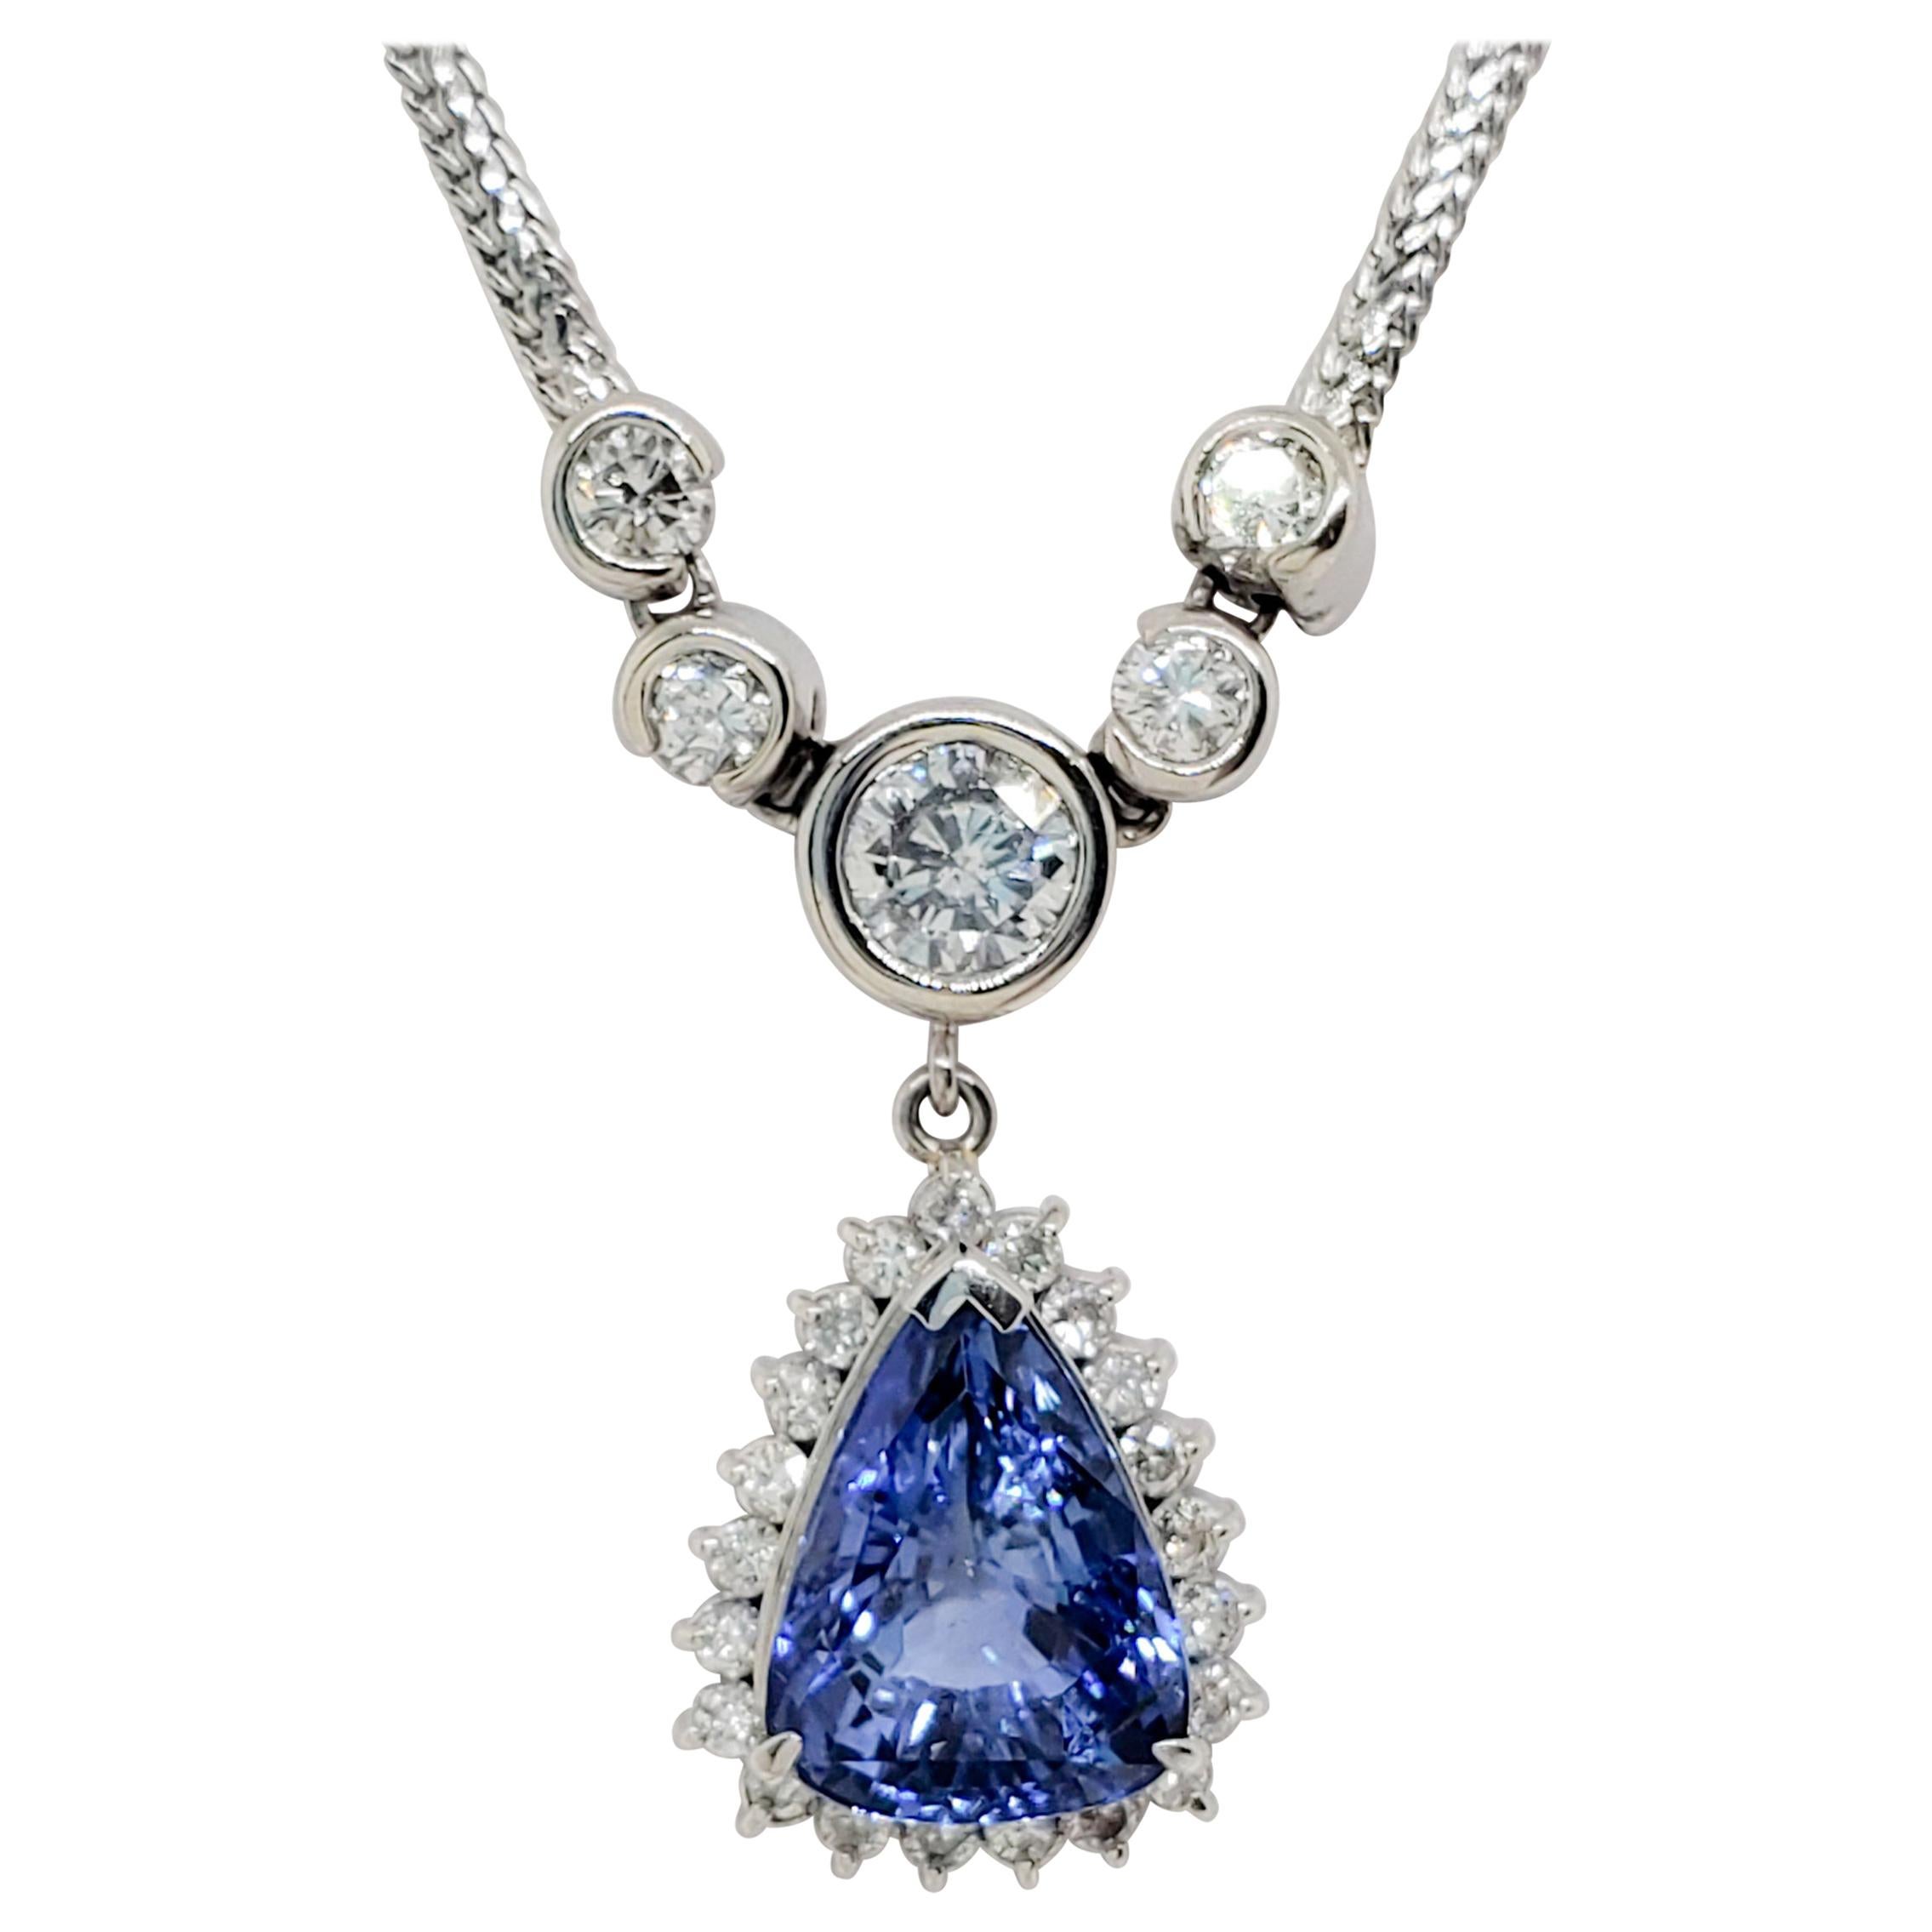 Sri Lanka Blue Sapphire pear Shape and White Diamond Pendant Necklace